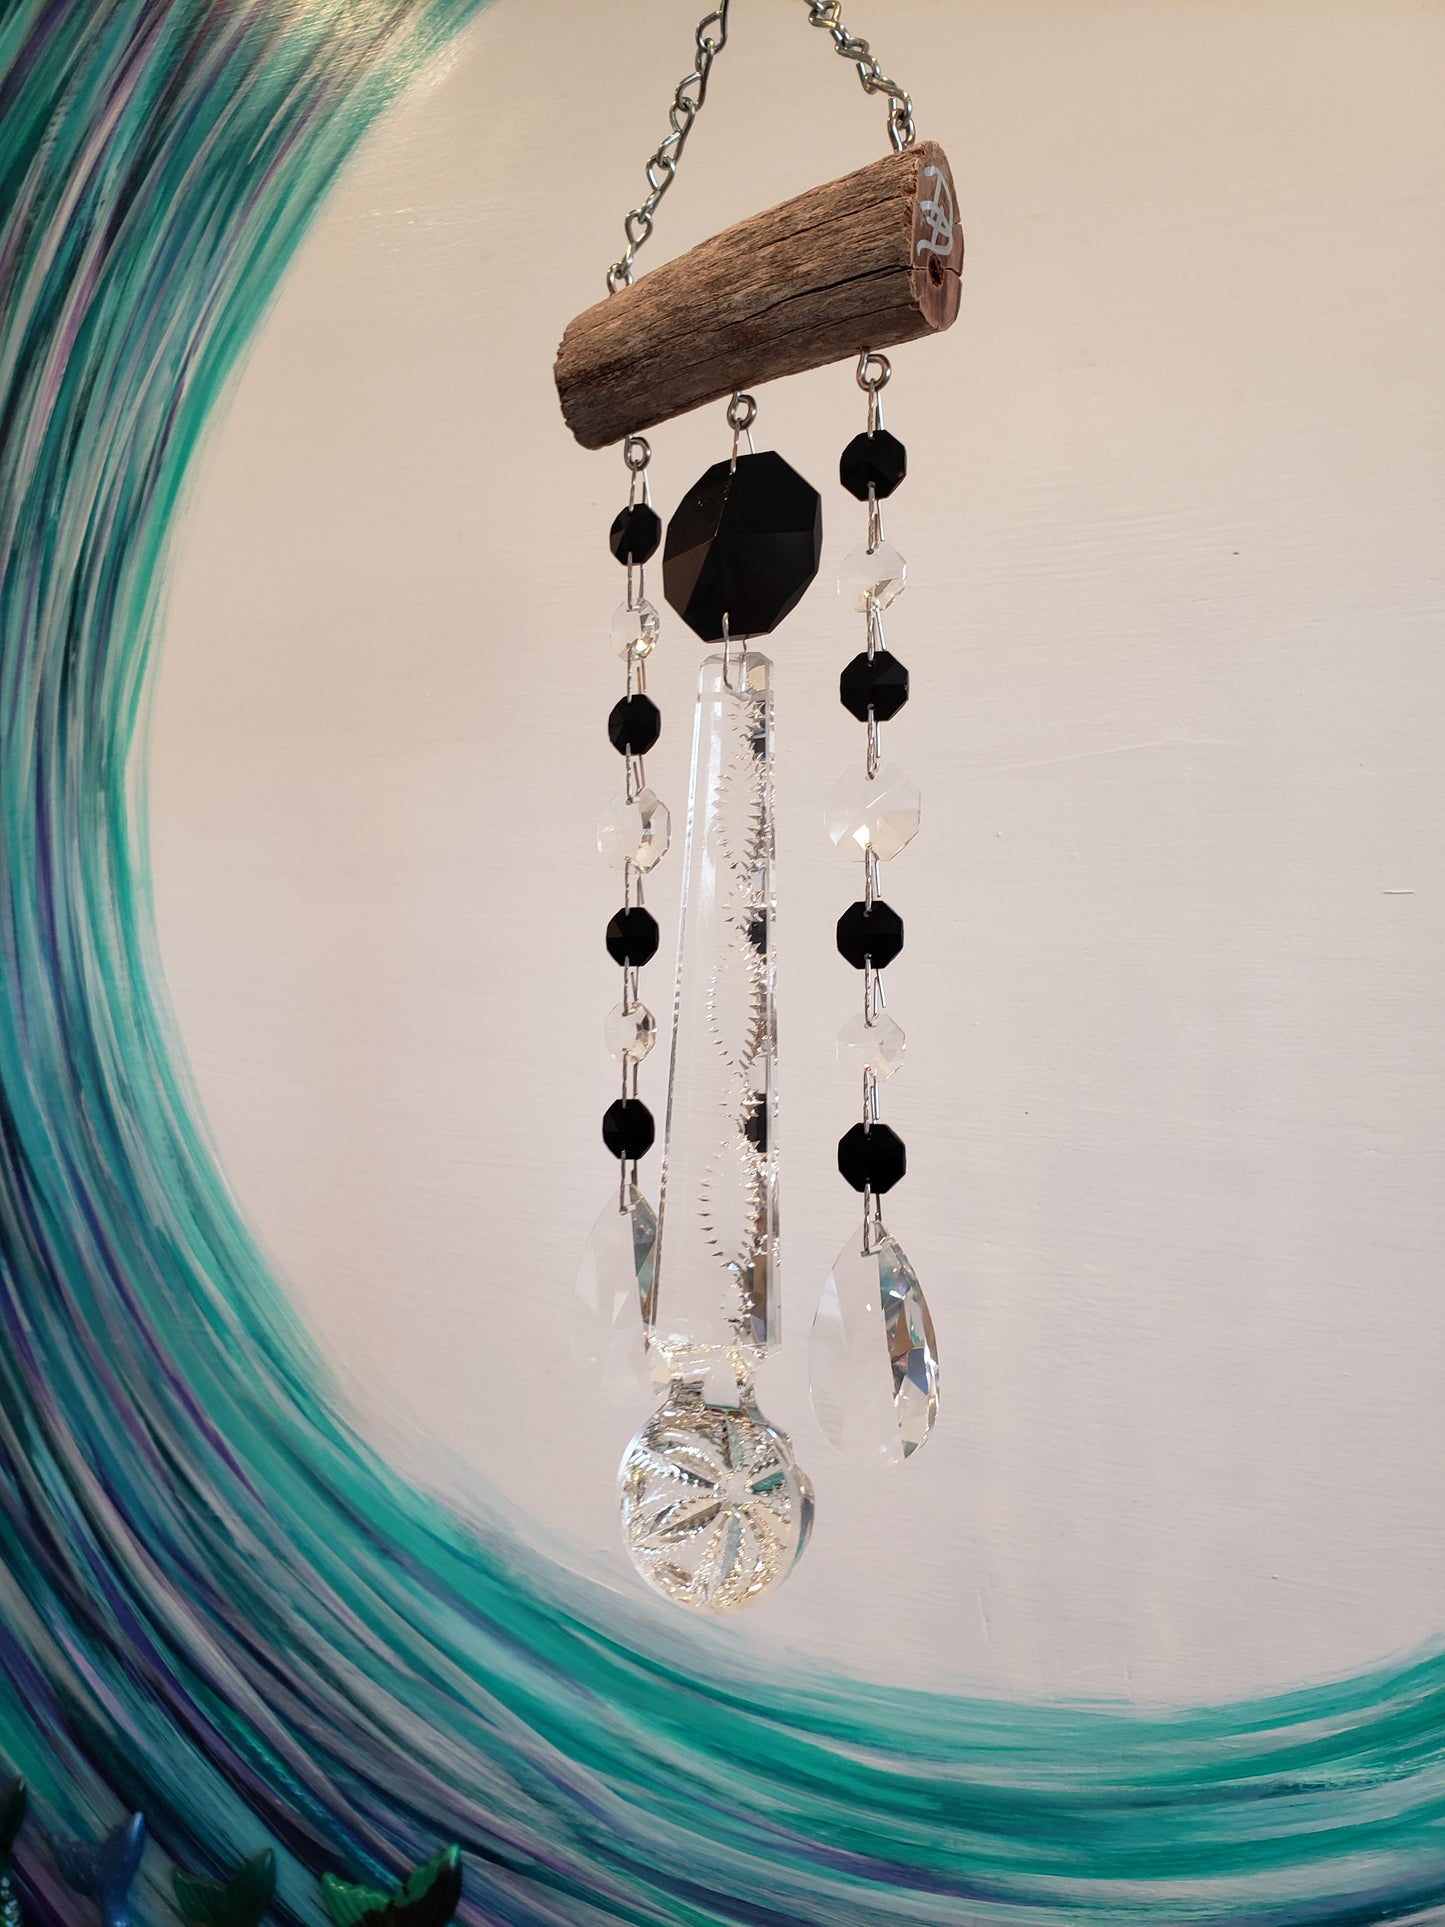 Unique handmade chandelier crystal windchime suncatchers by Dazzling Driftwood.